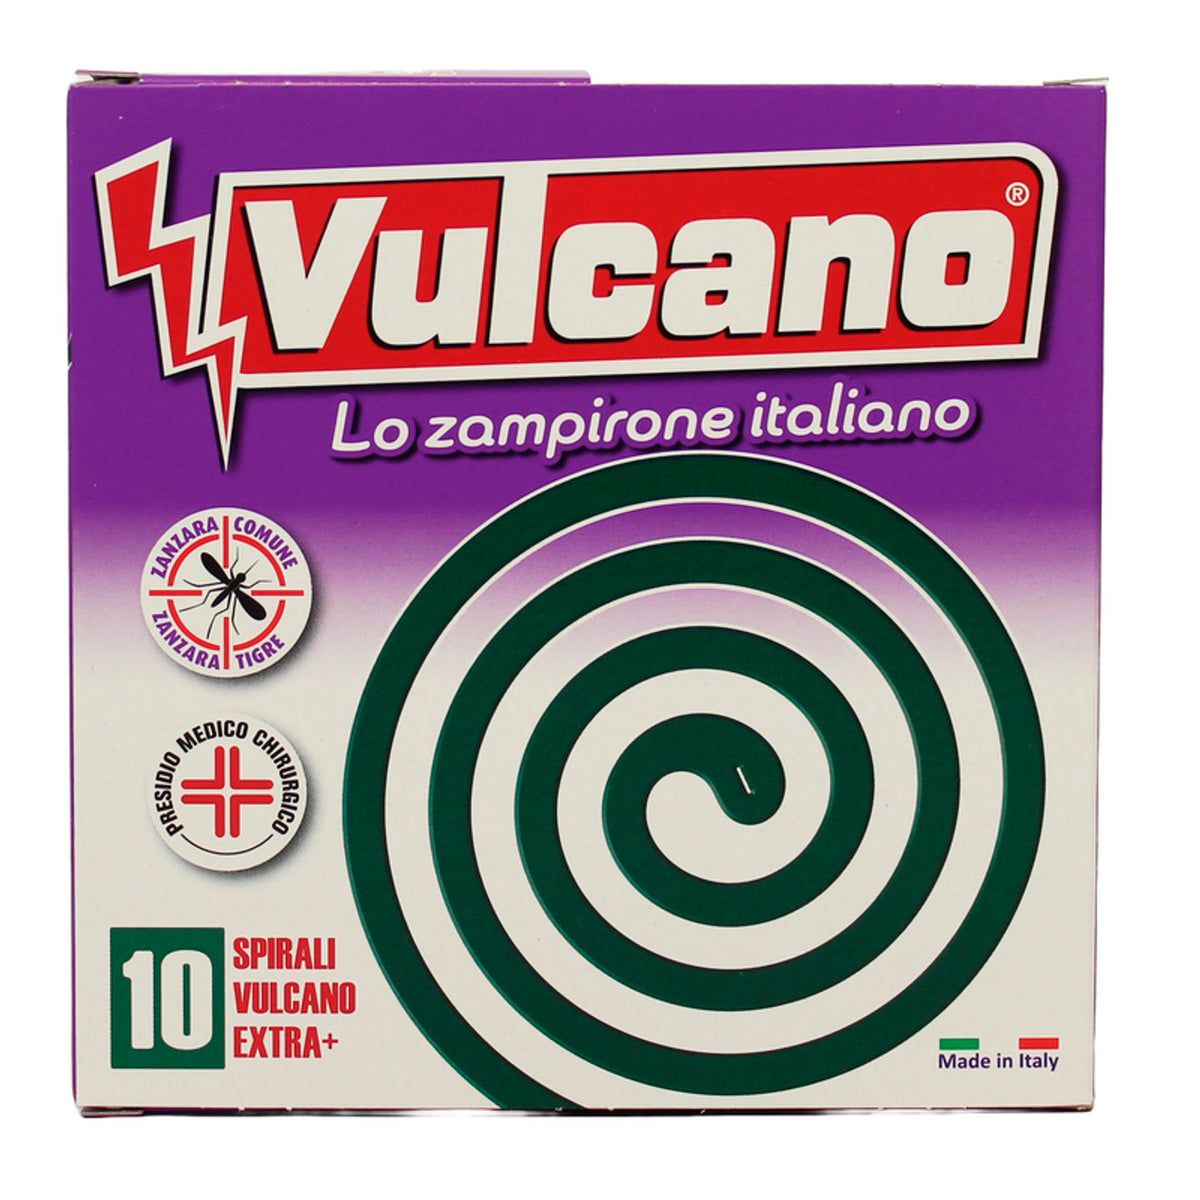 Vulcano spirali 10 pcs.classic εναντίον κουνούπια και pappataci